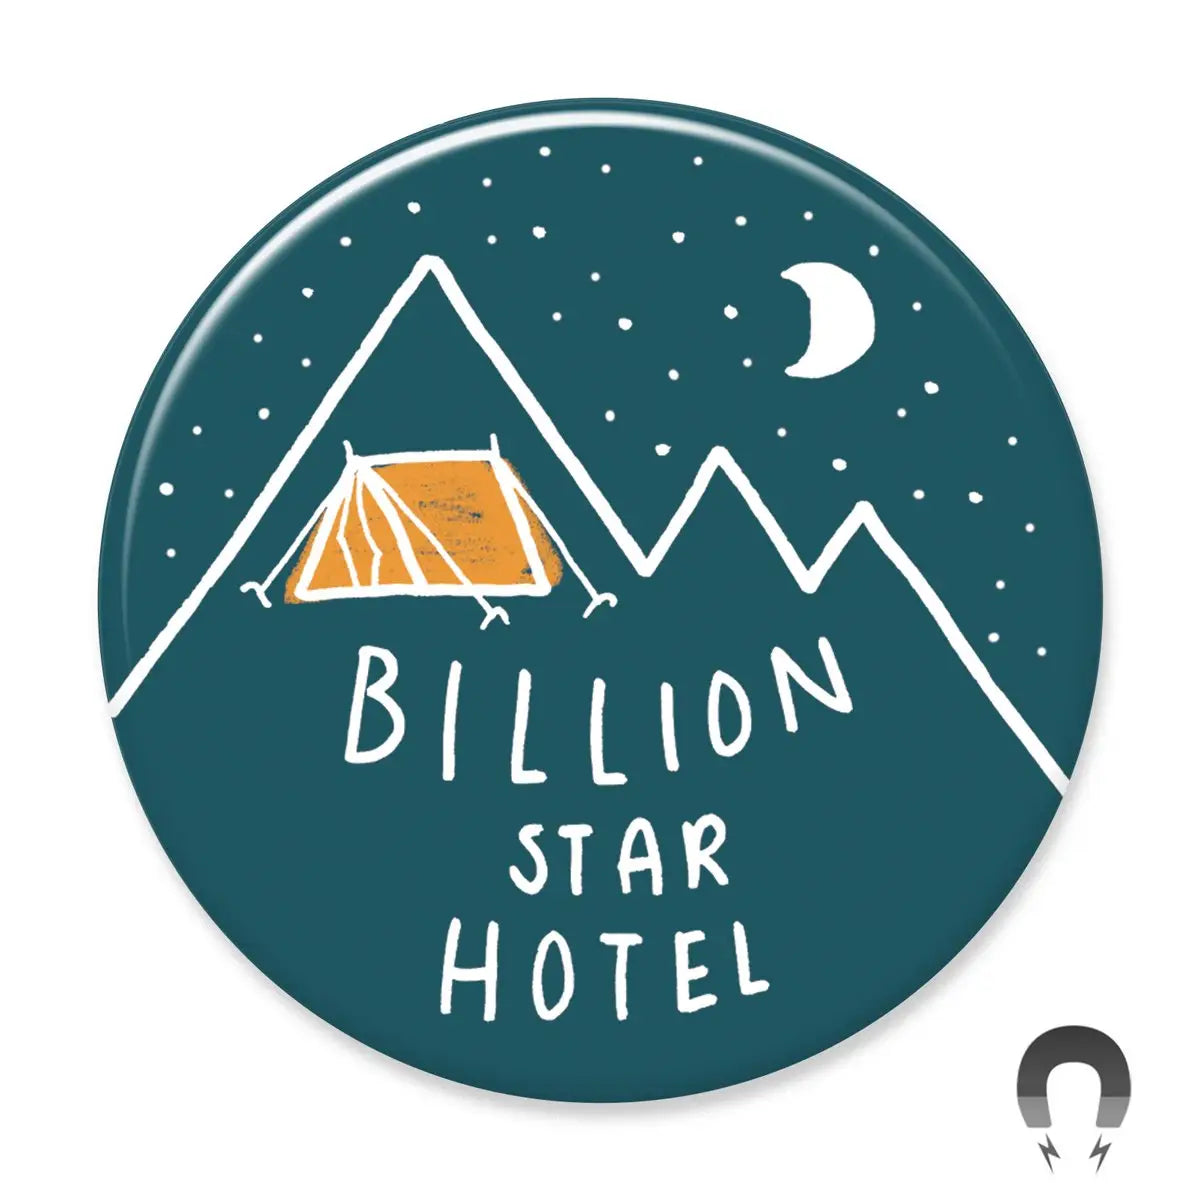 Load image into Gallery viewer, Billion Star Hotel Big Magnet
